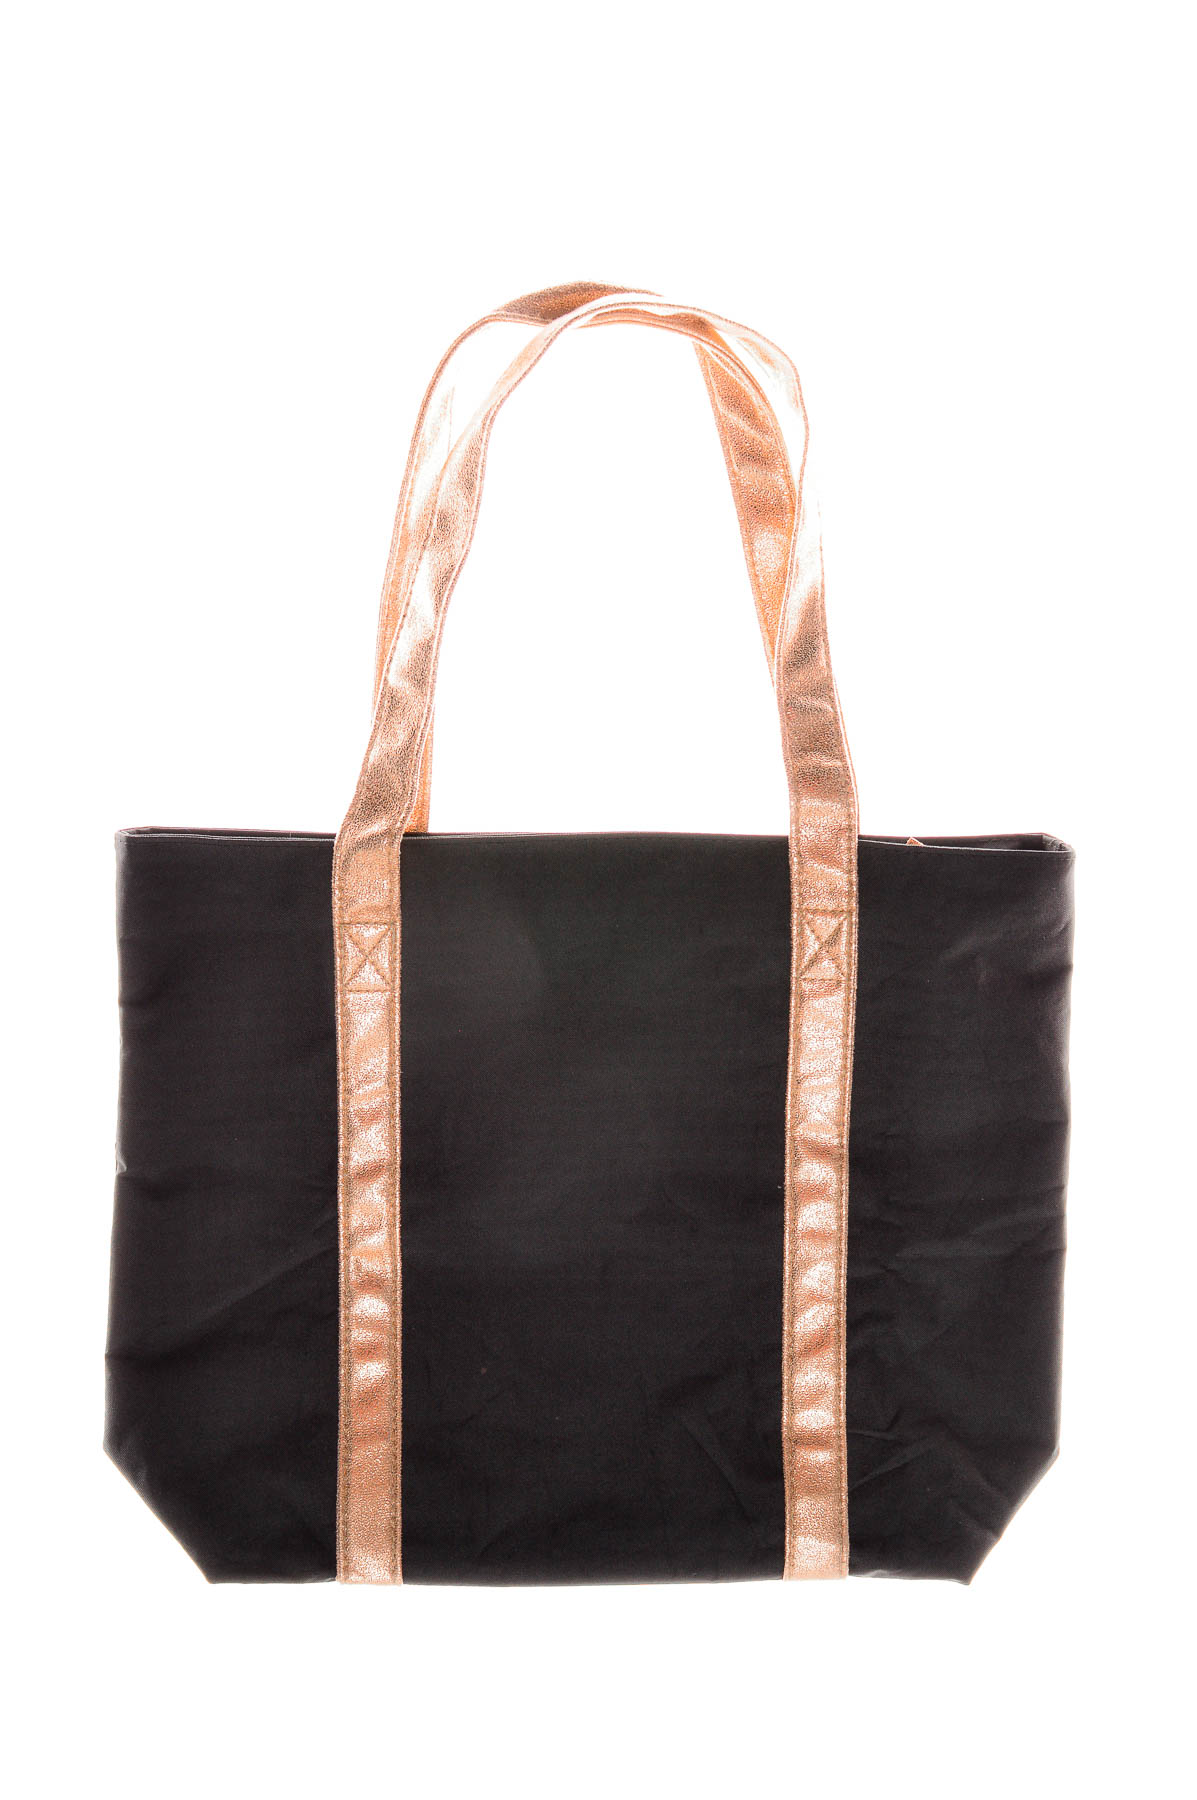 Shopping bag - LBVYR - 1